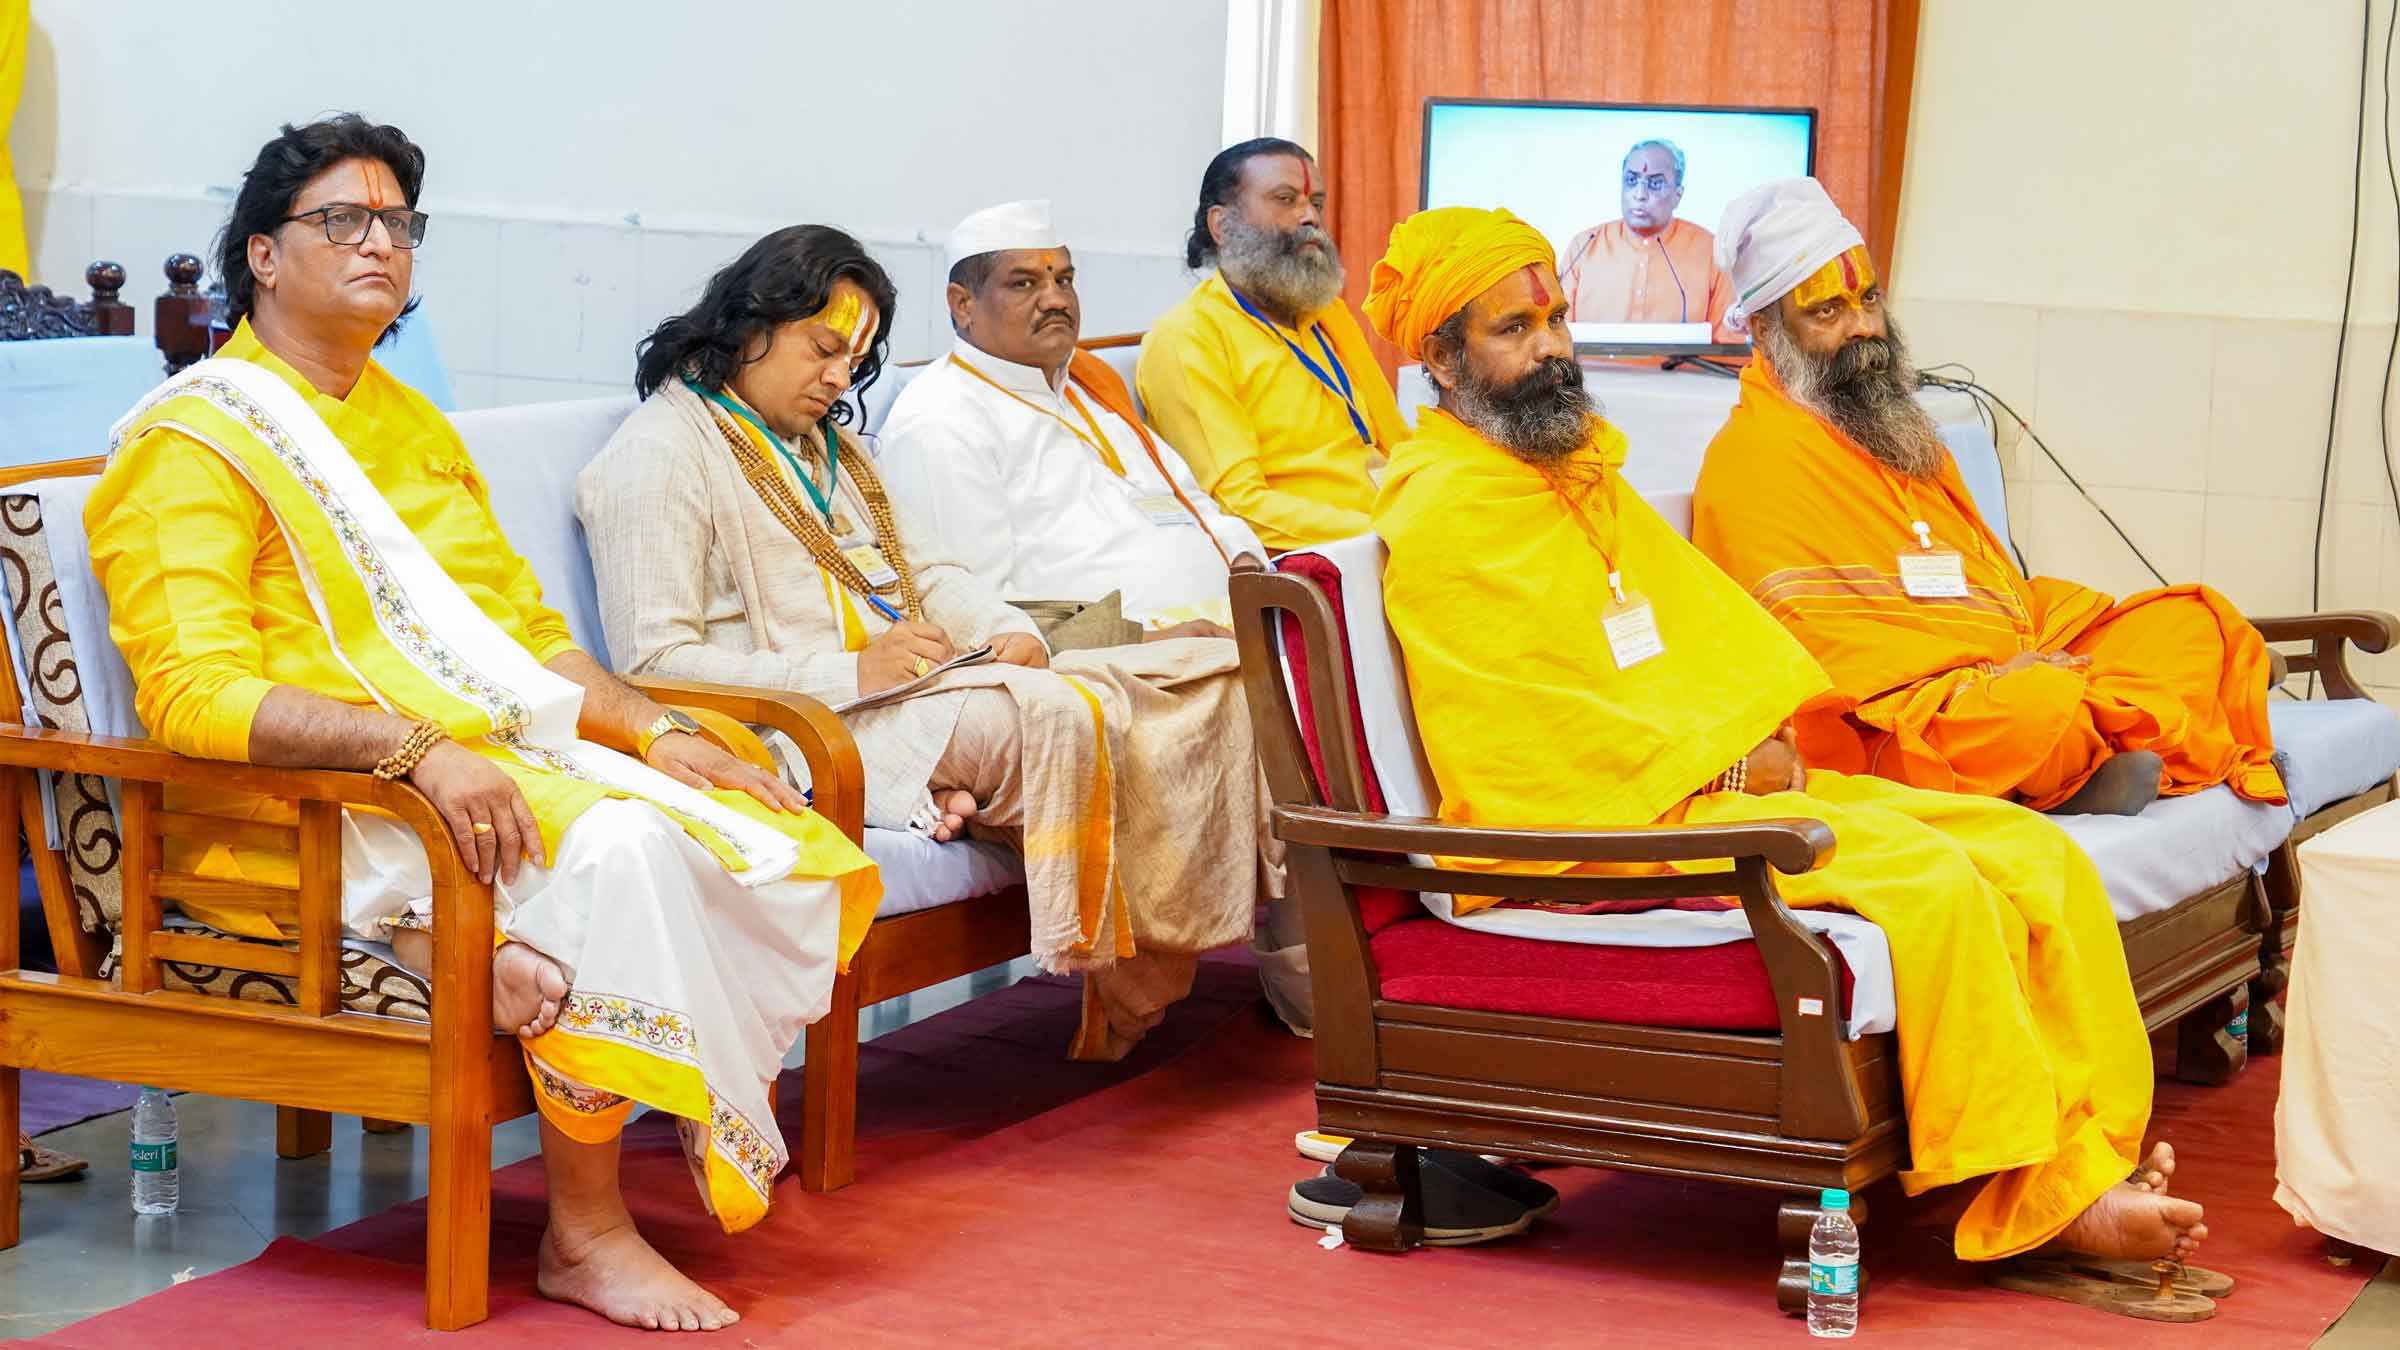 Saints listening intently to the Speakers in the 'Vaishvik Hindu Rashtra Mahotsav'